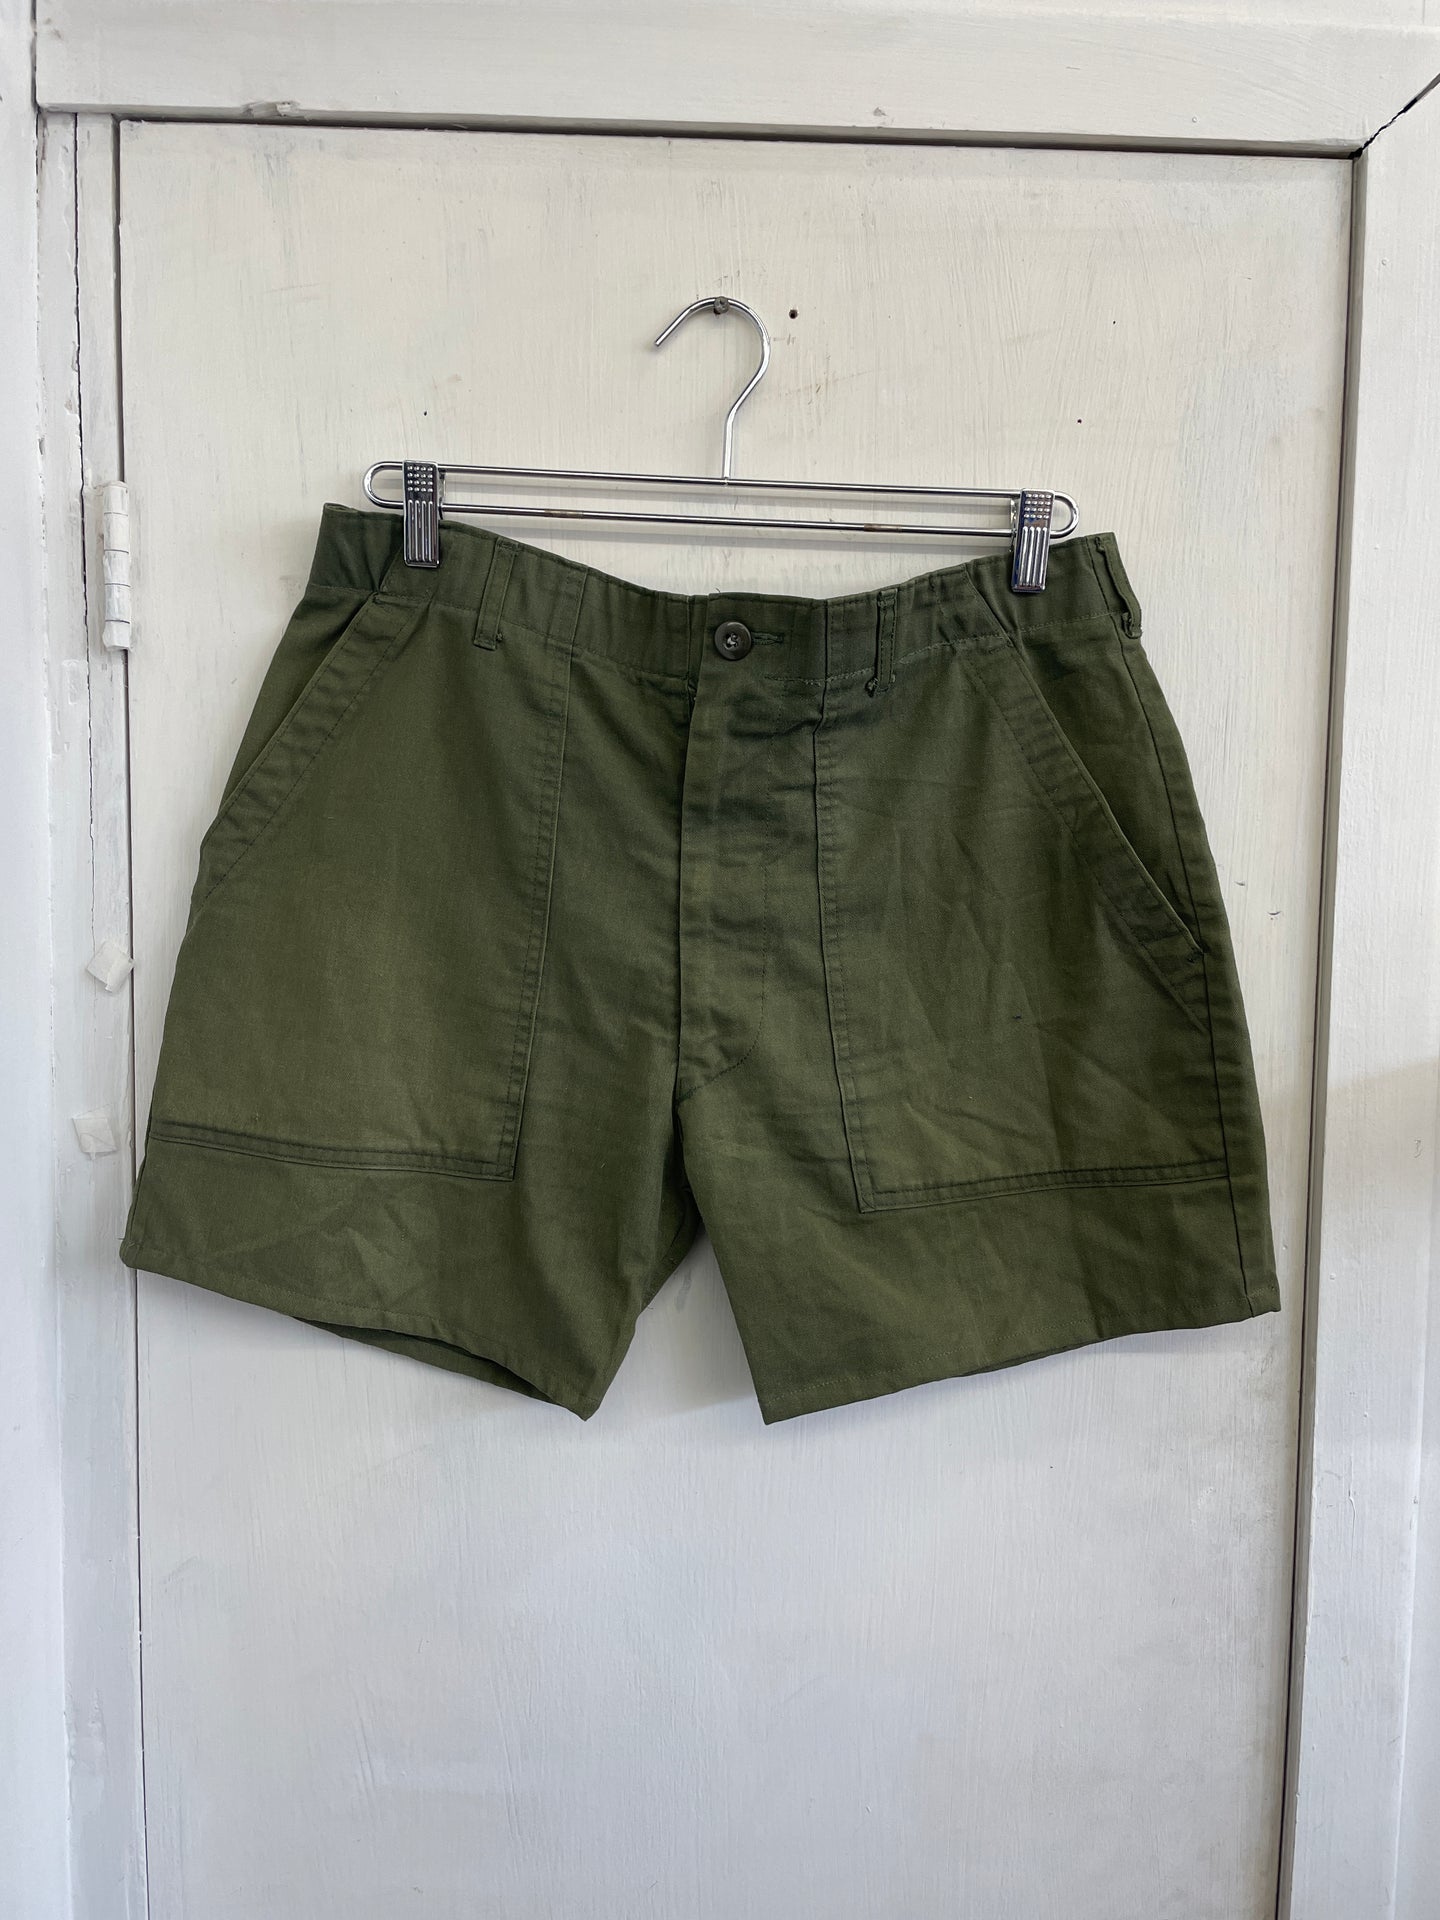 *1970s/80s OG-507 Cotton/Poly Shorts